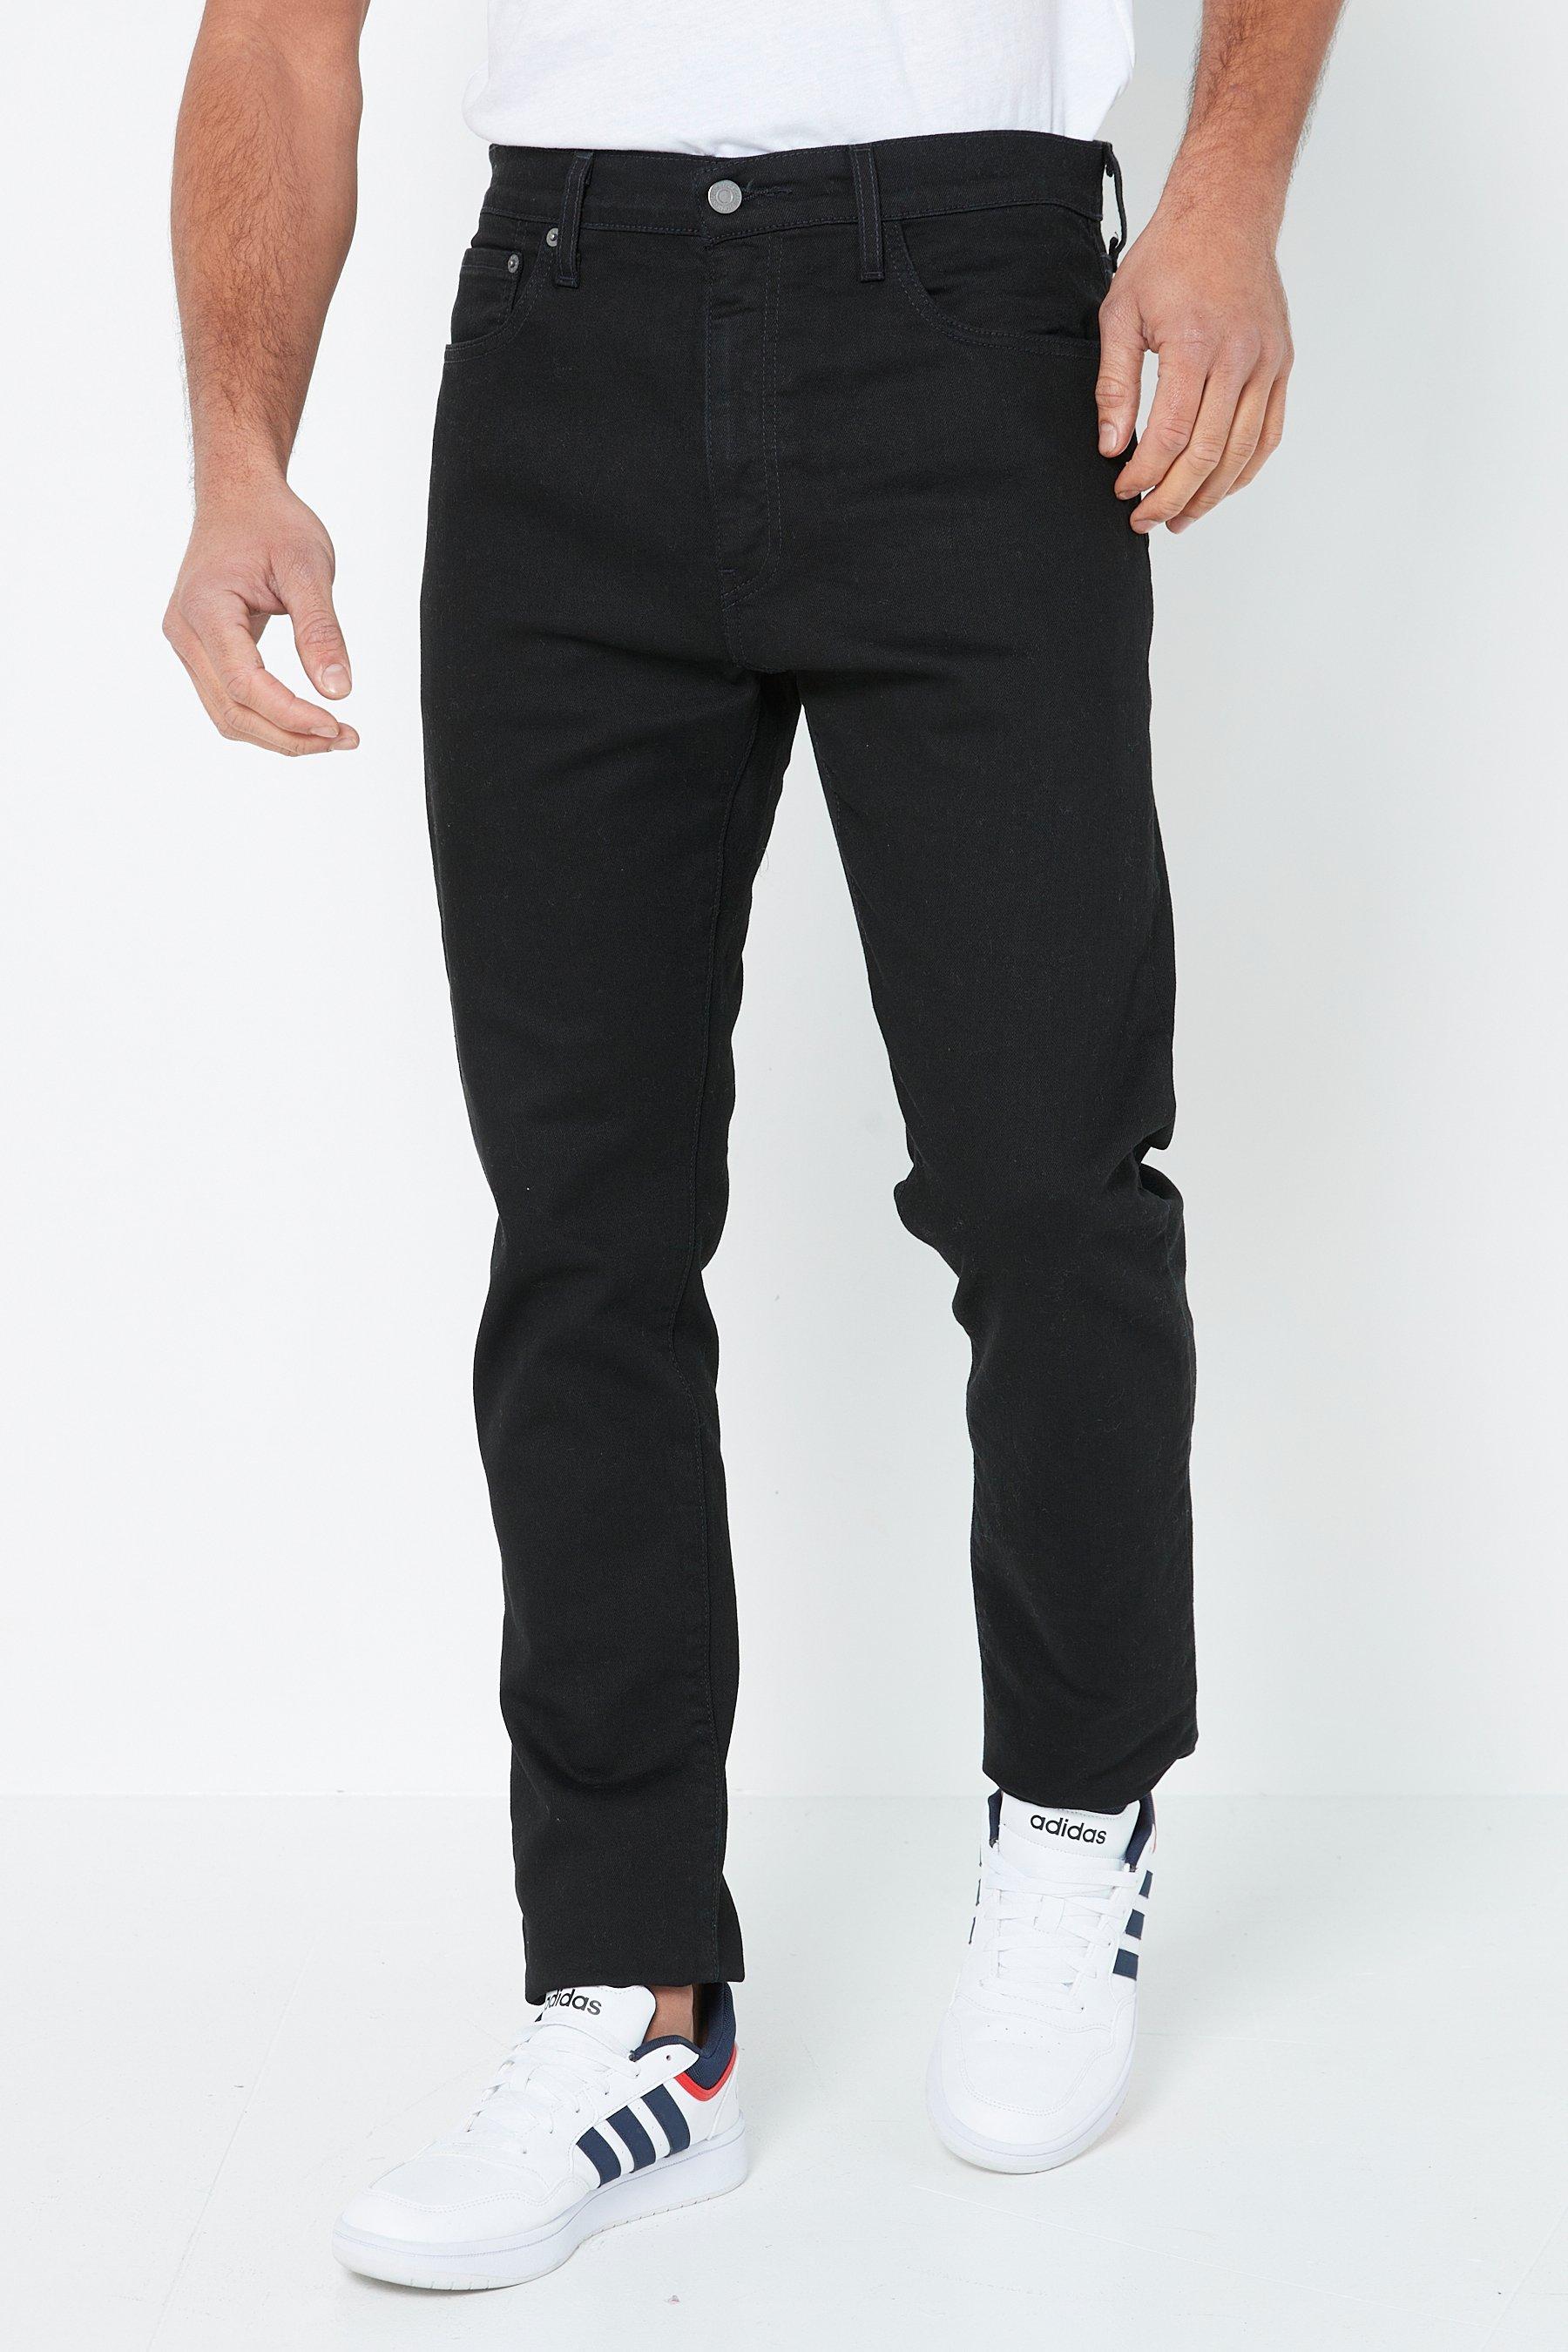 levis 512 black slim tapered fit jeans - mens - size: 30 waist 30 leg